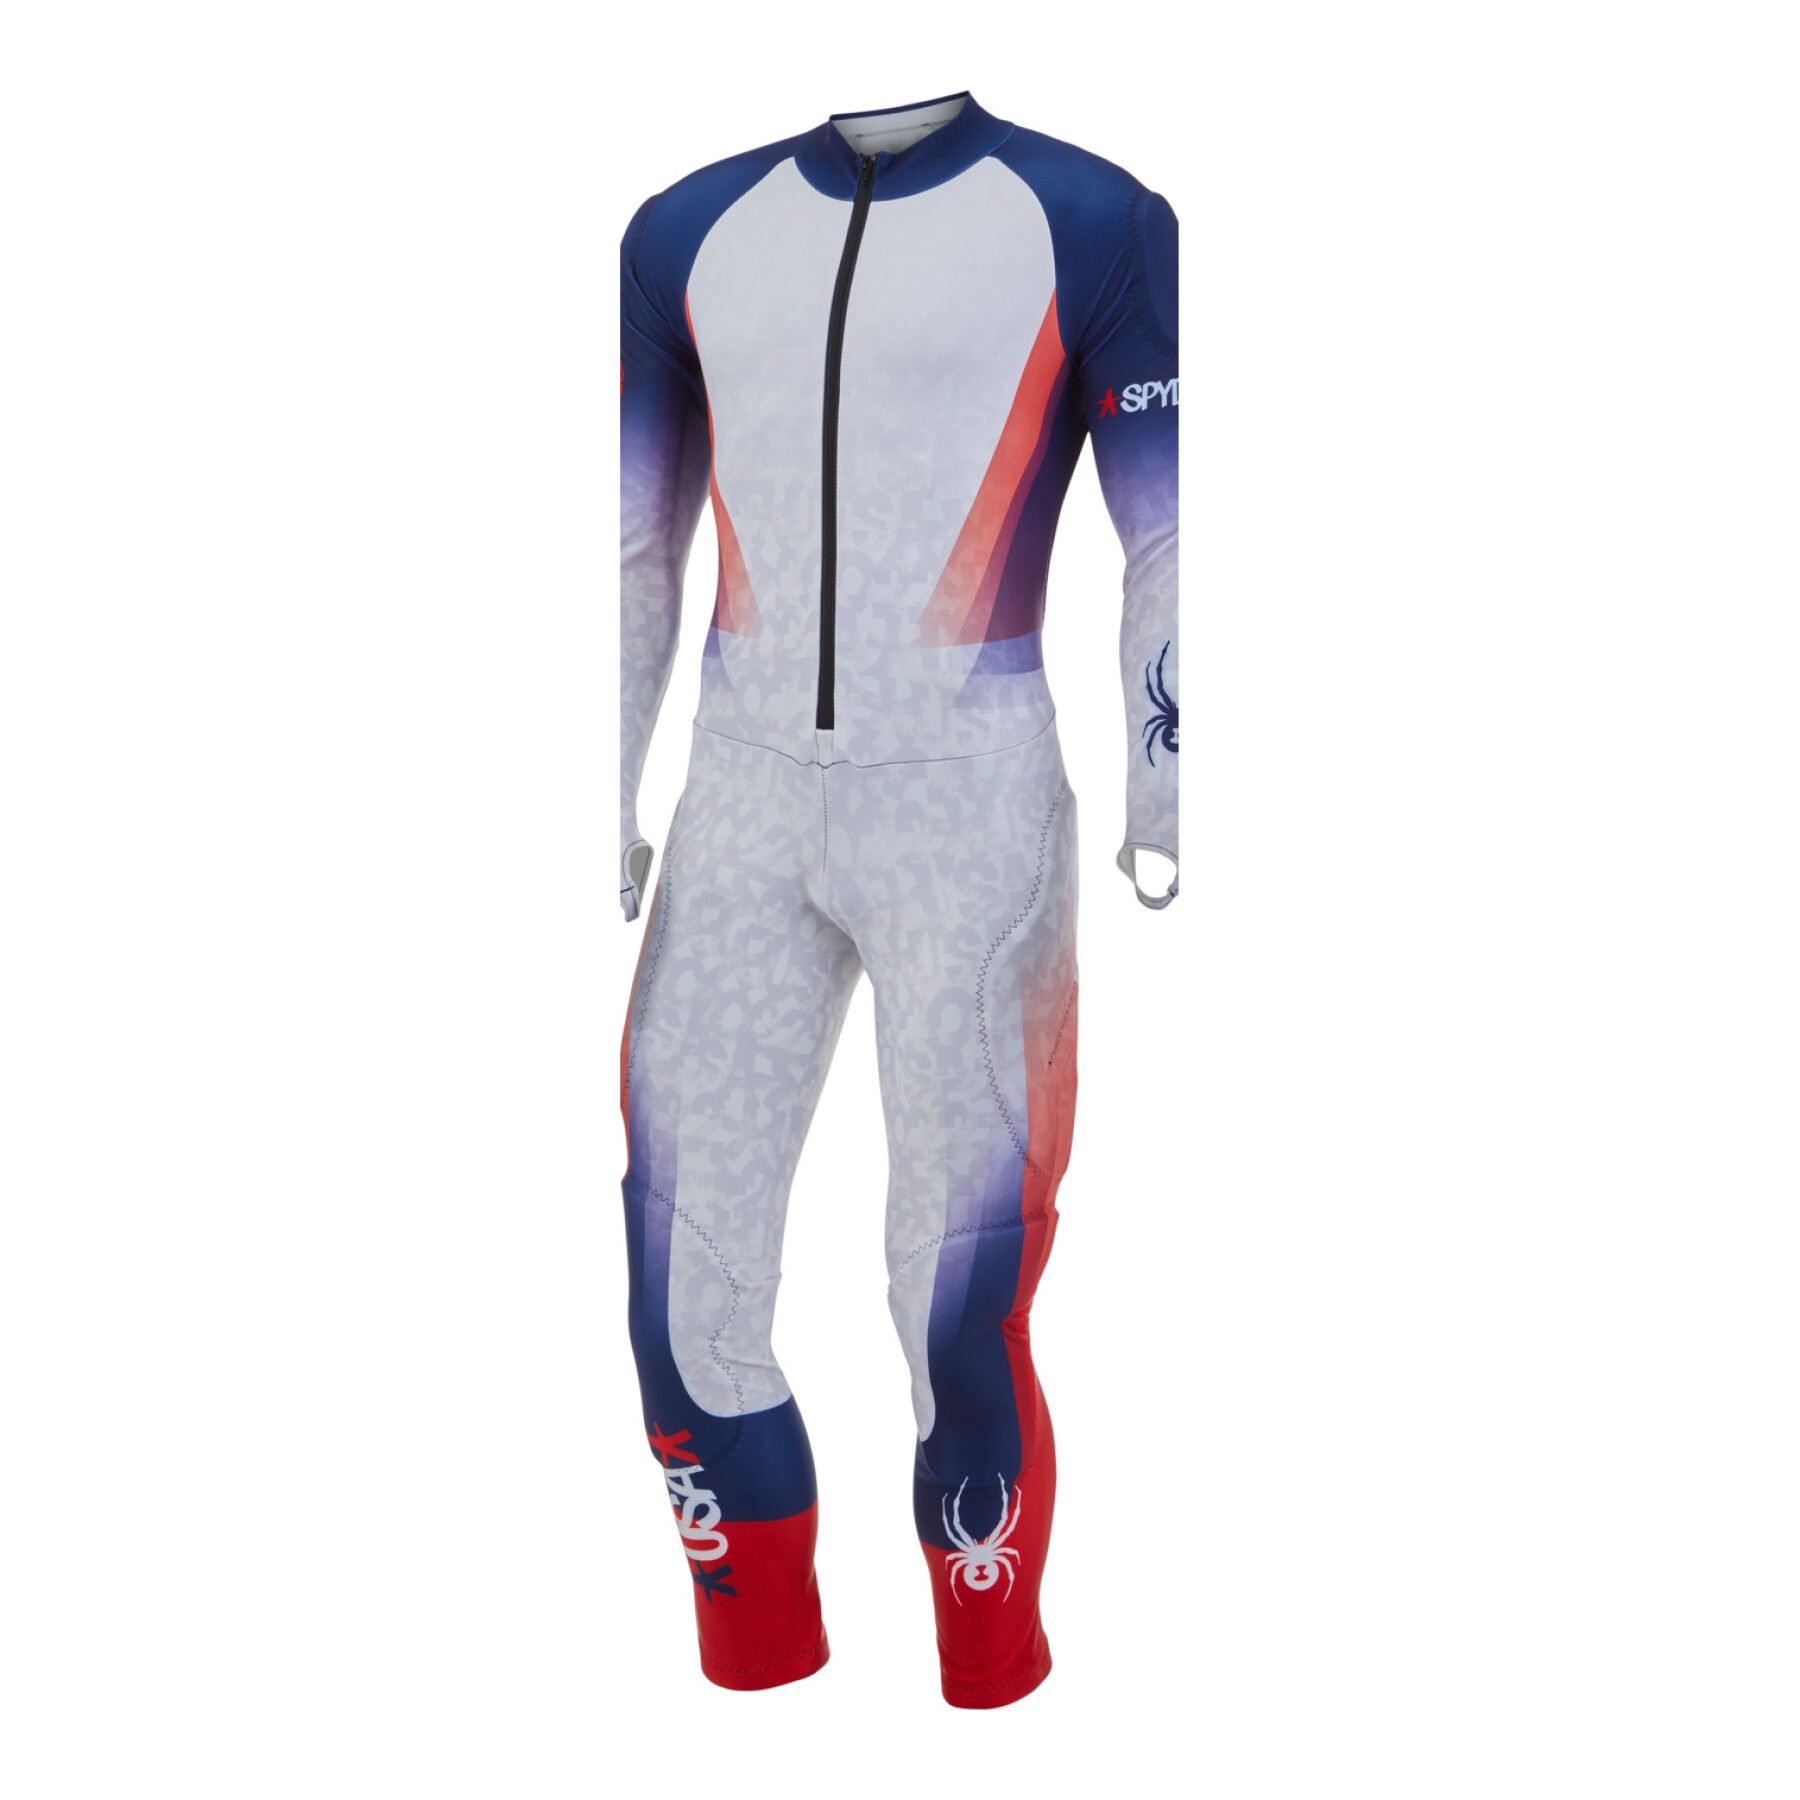 Ski suit Spyder Performance GS